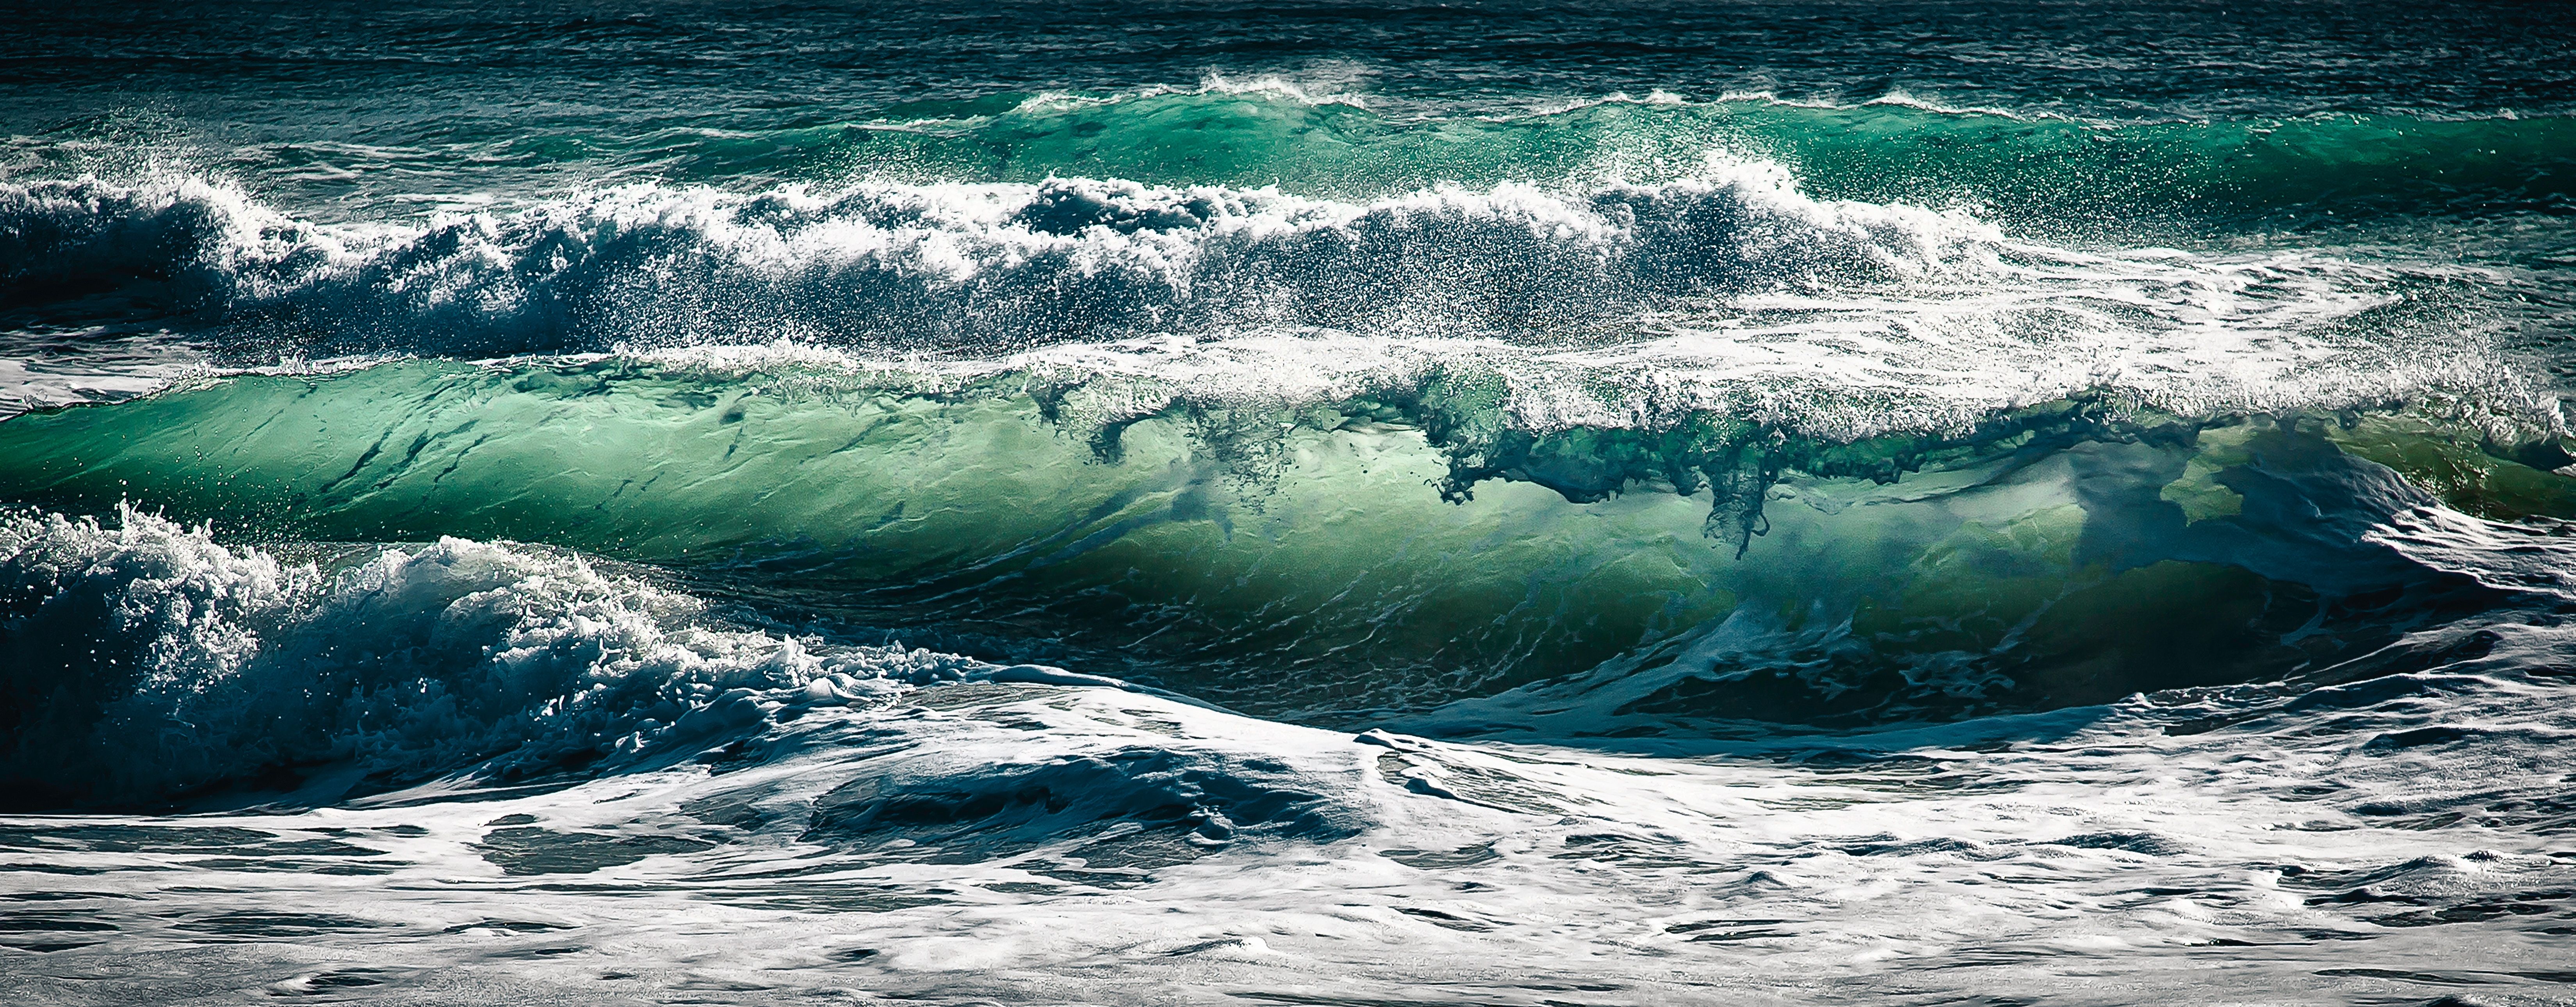 6598x2580 #panorama, #wild sea, #ocean, #water, #wild wave, #motion, #movement, #crest, #green water, #wave, #sea, #frozen motion, #Public domain image, #waves, #crisp wave, #wild ocean, #sharp, #surf wave, #ocean wave, #surf, #